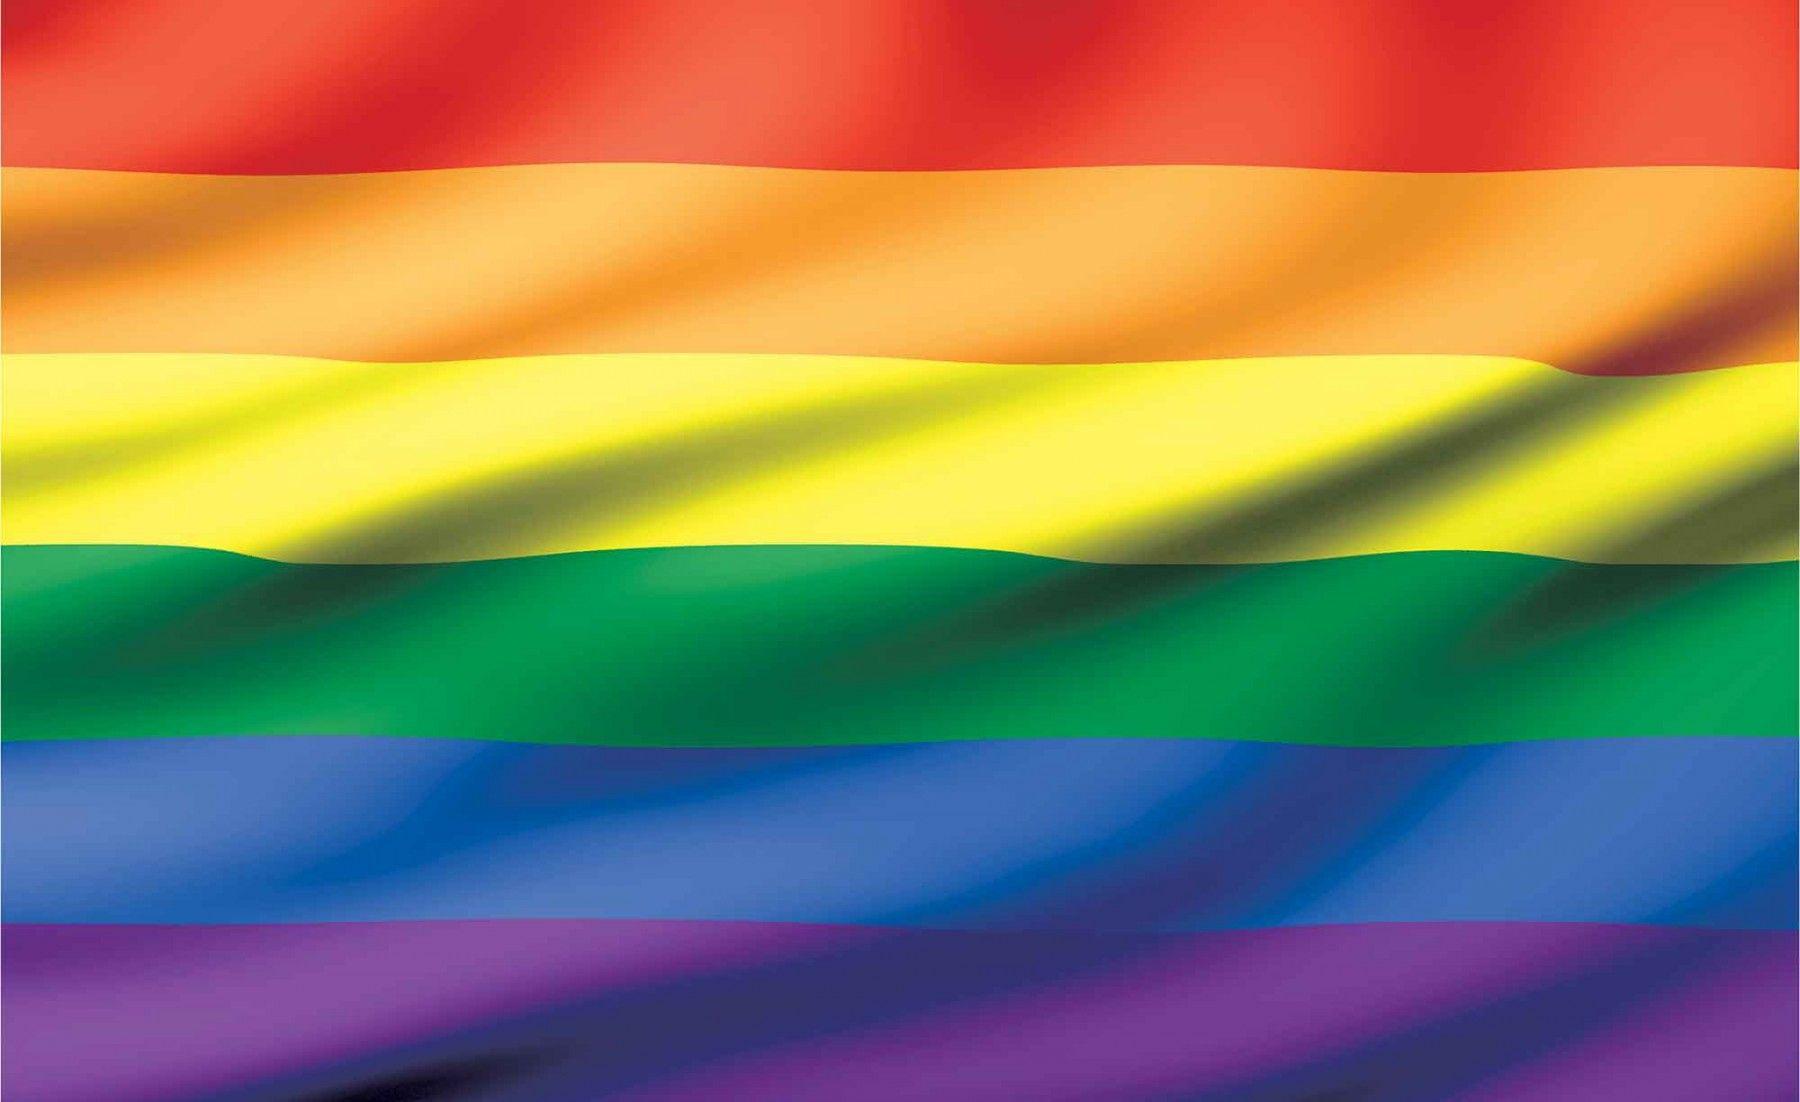 gay pride flag background 1080p